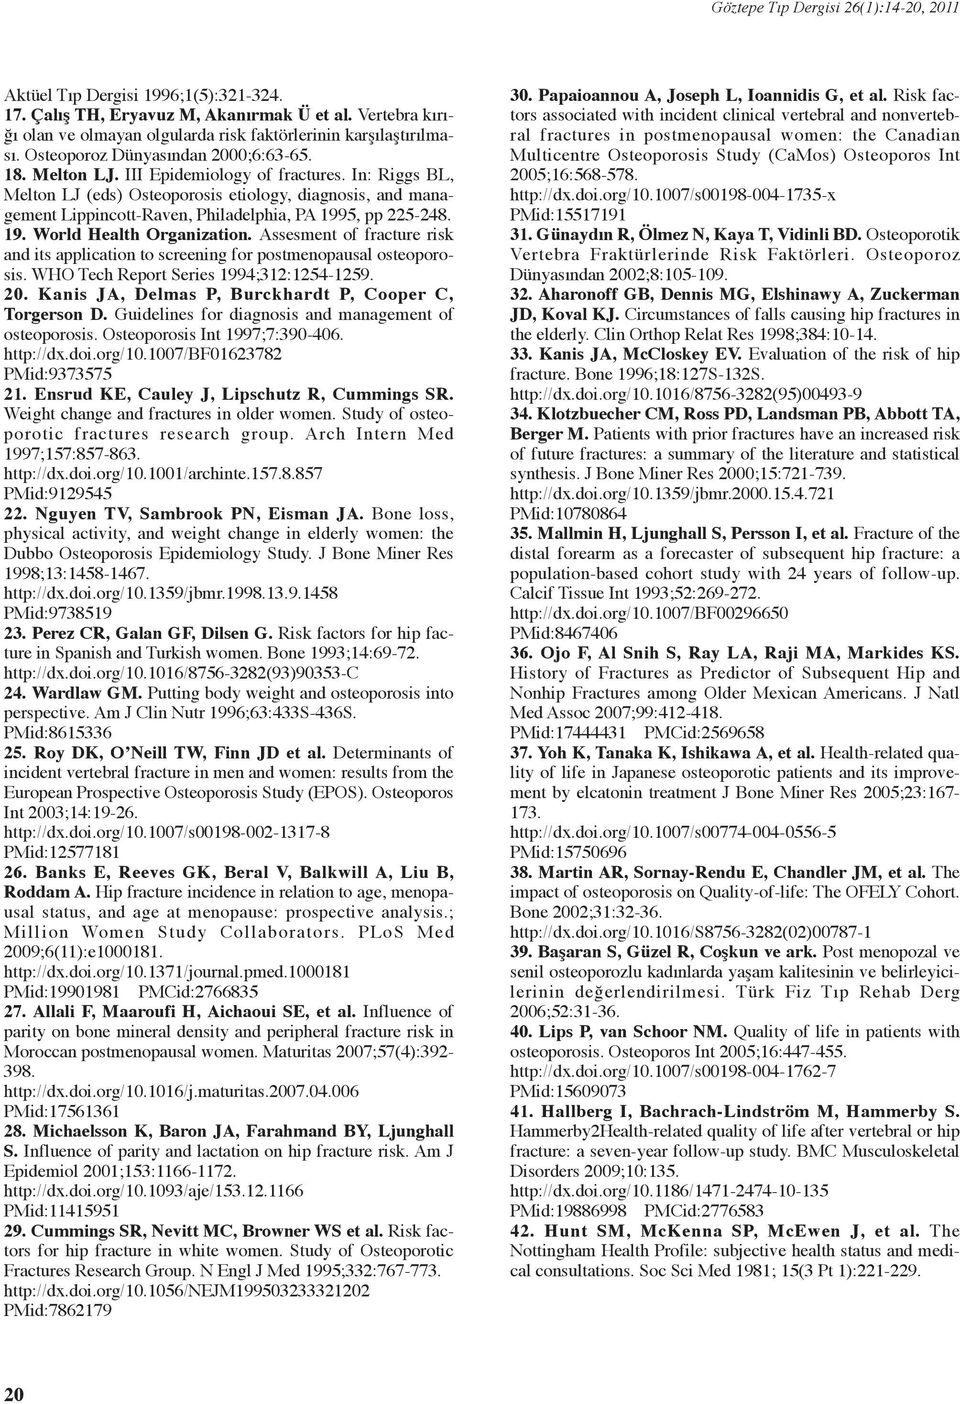 In: Riggs BL, Melton LJ (eds) Osteoorosis etiology, diagnosis, and management Liincott-Raven, Philadelhia, PA 1995, 225-248. 19. World Health Organization.